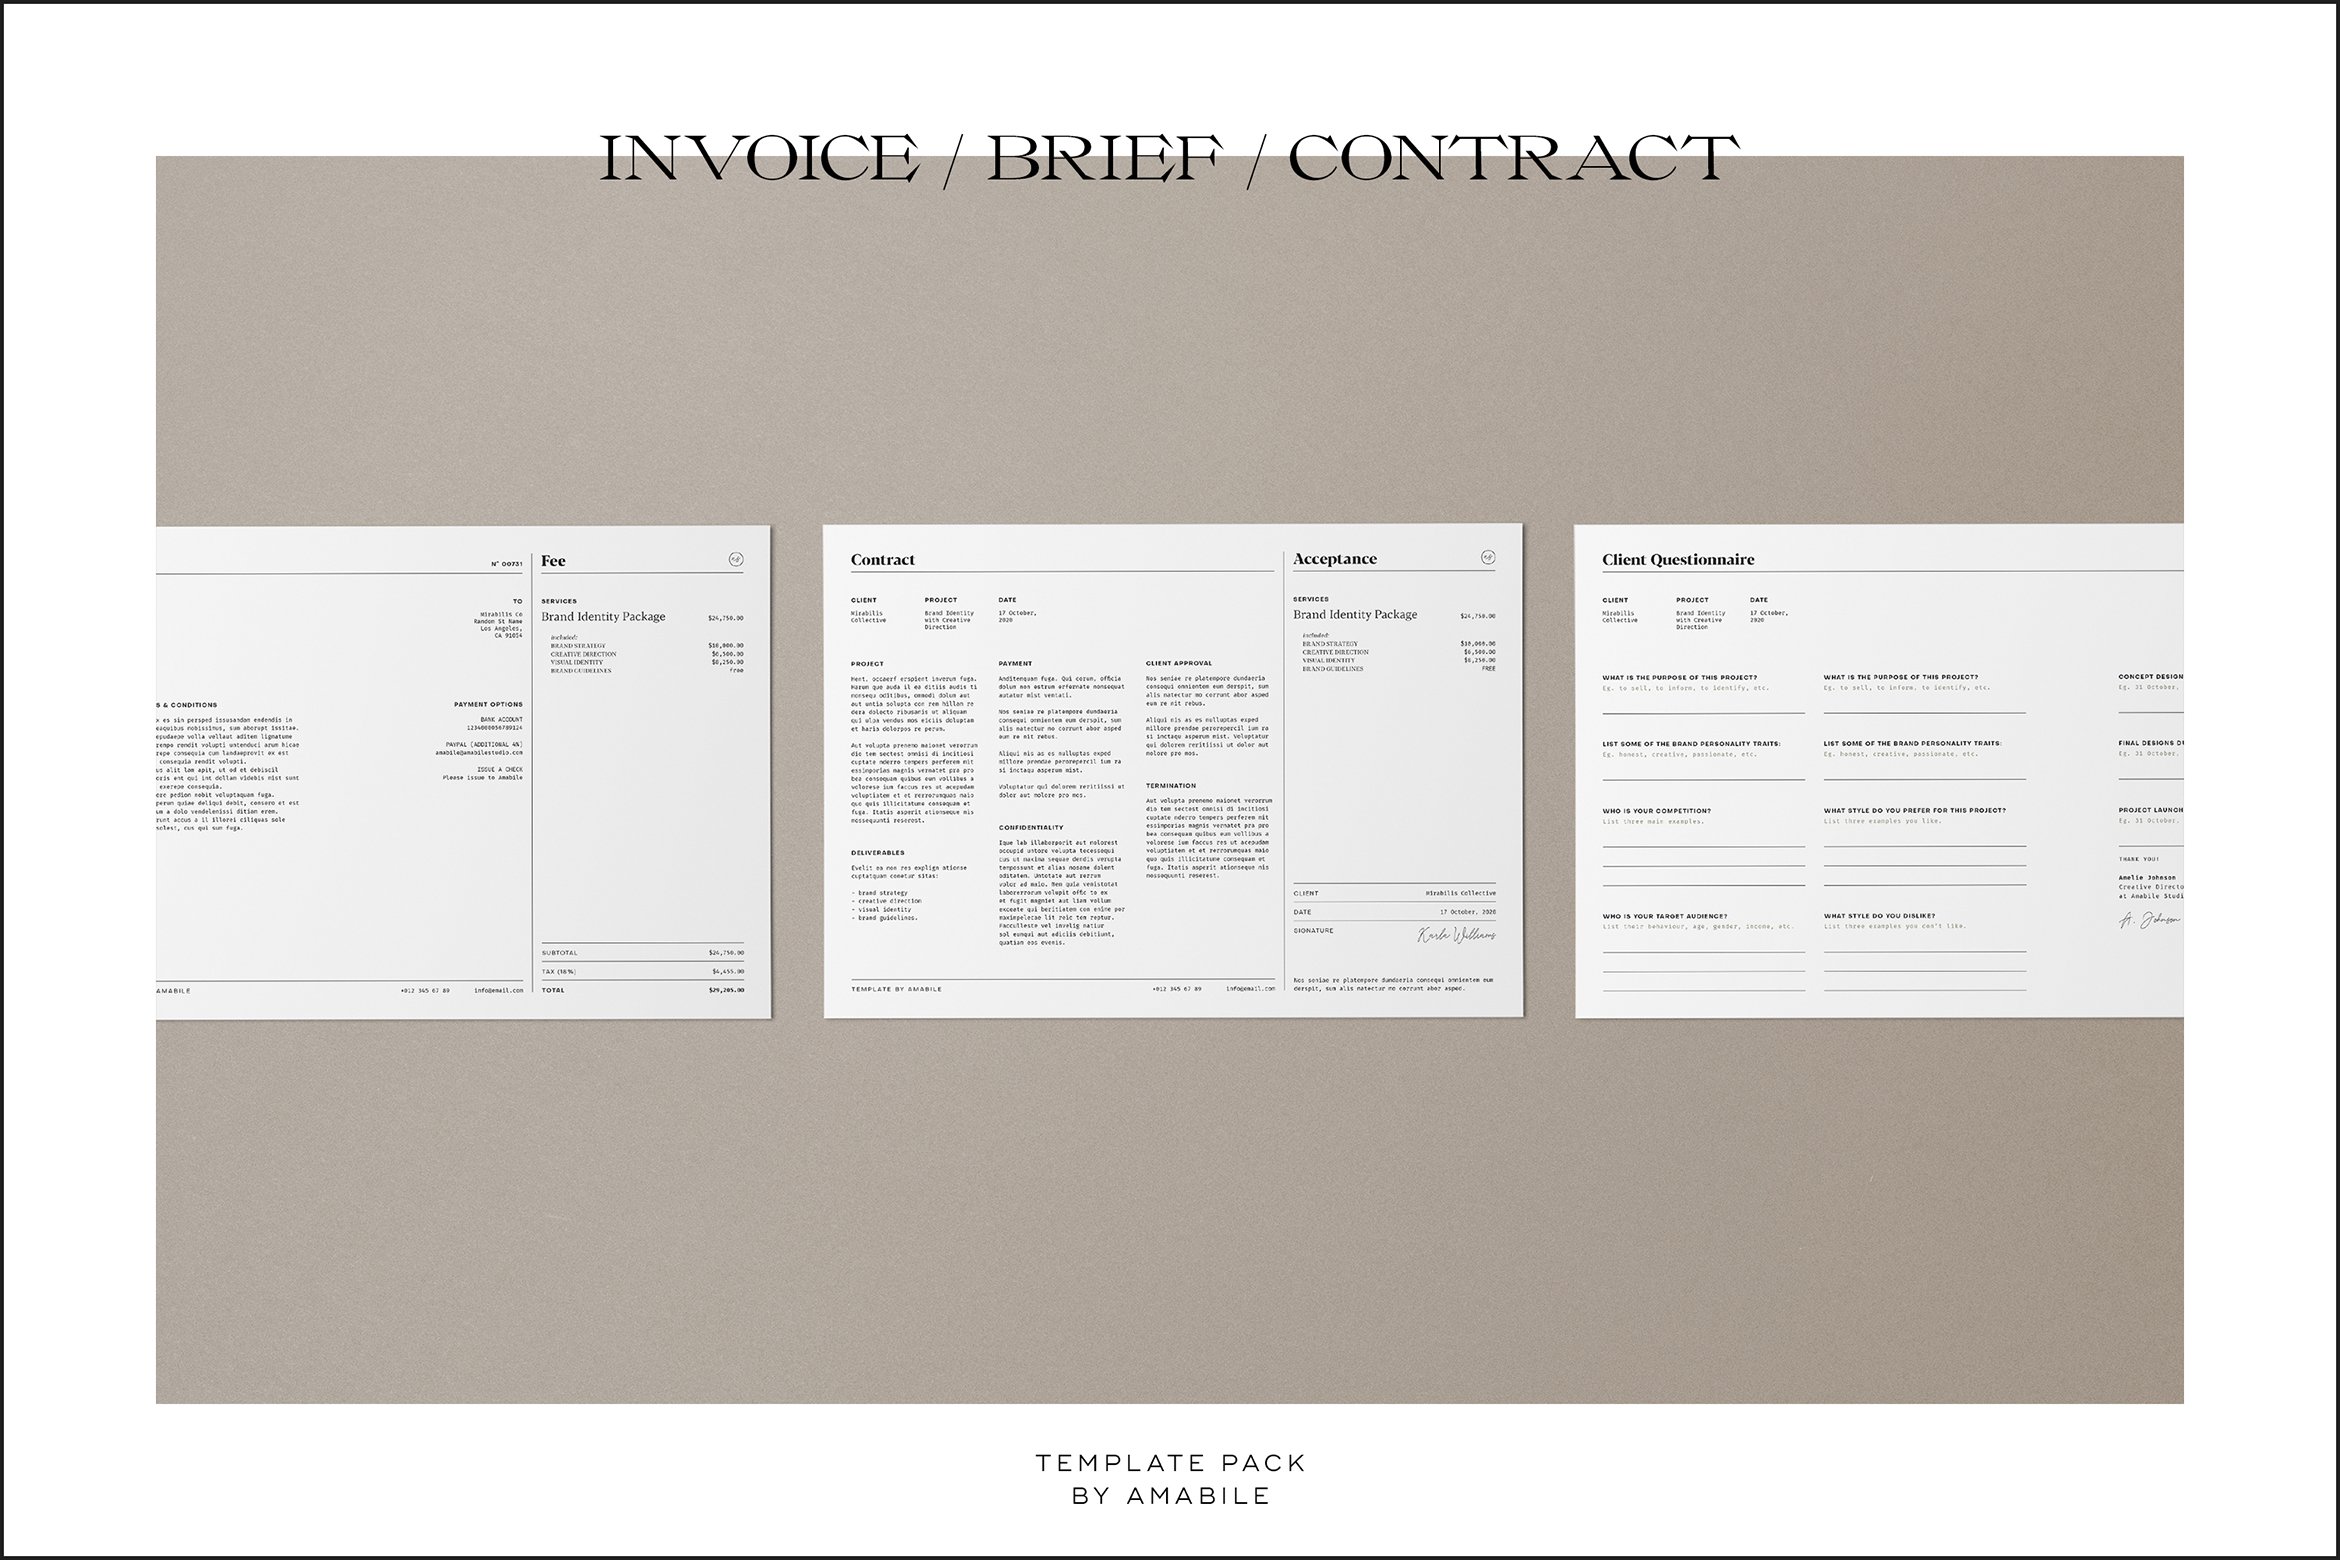 Invoice / Brief / Contract cover image.